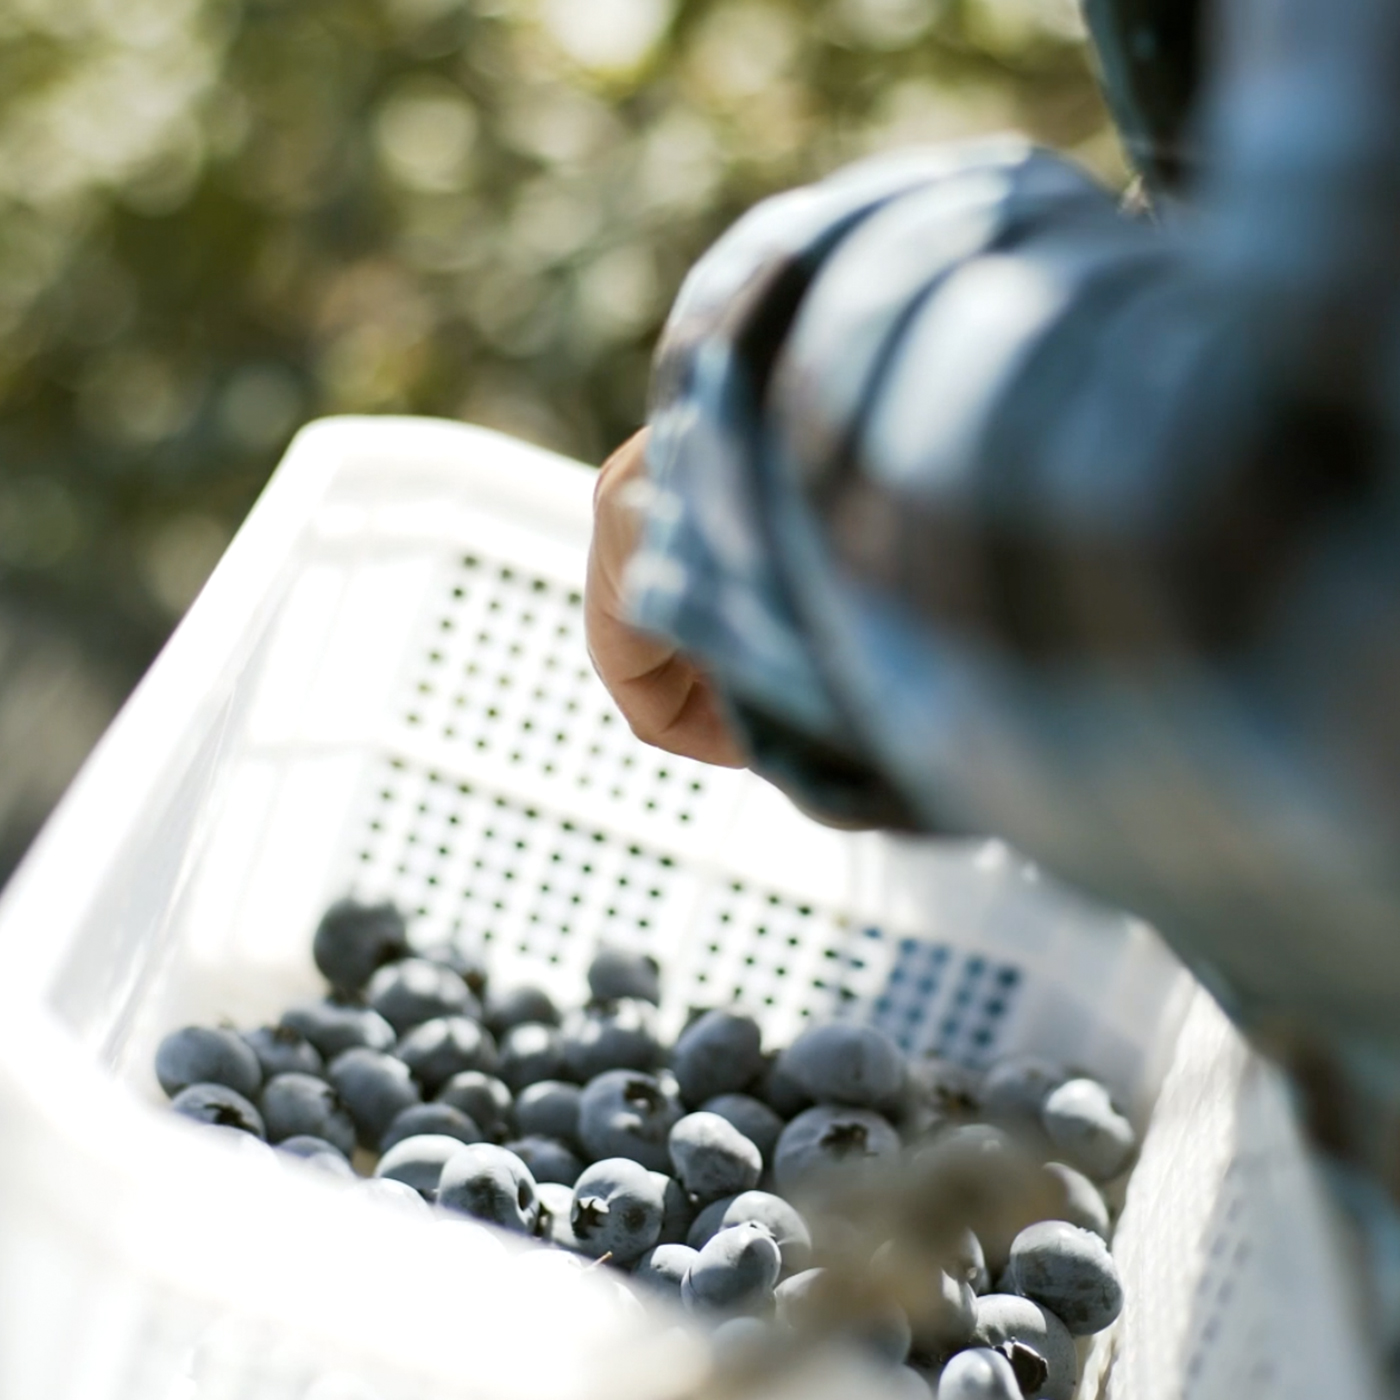 Harvesting blueberries